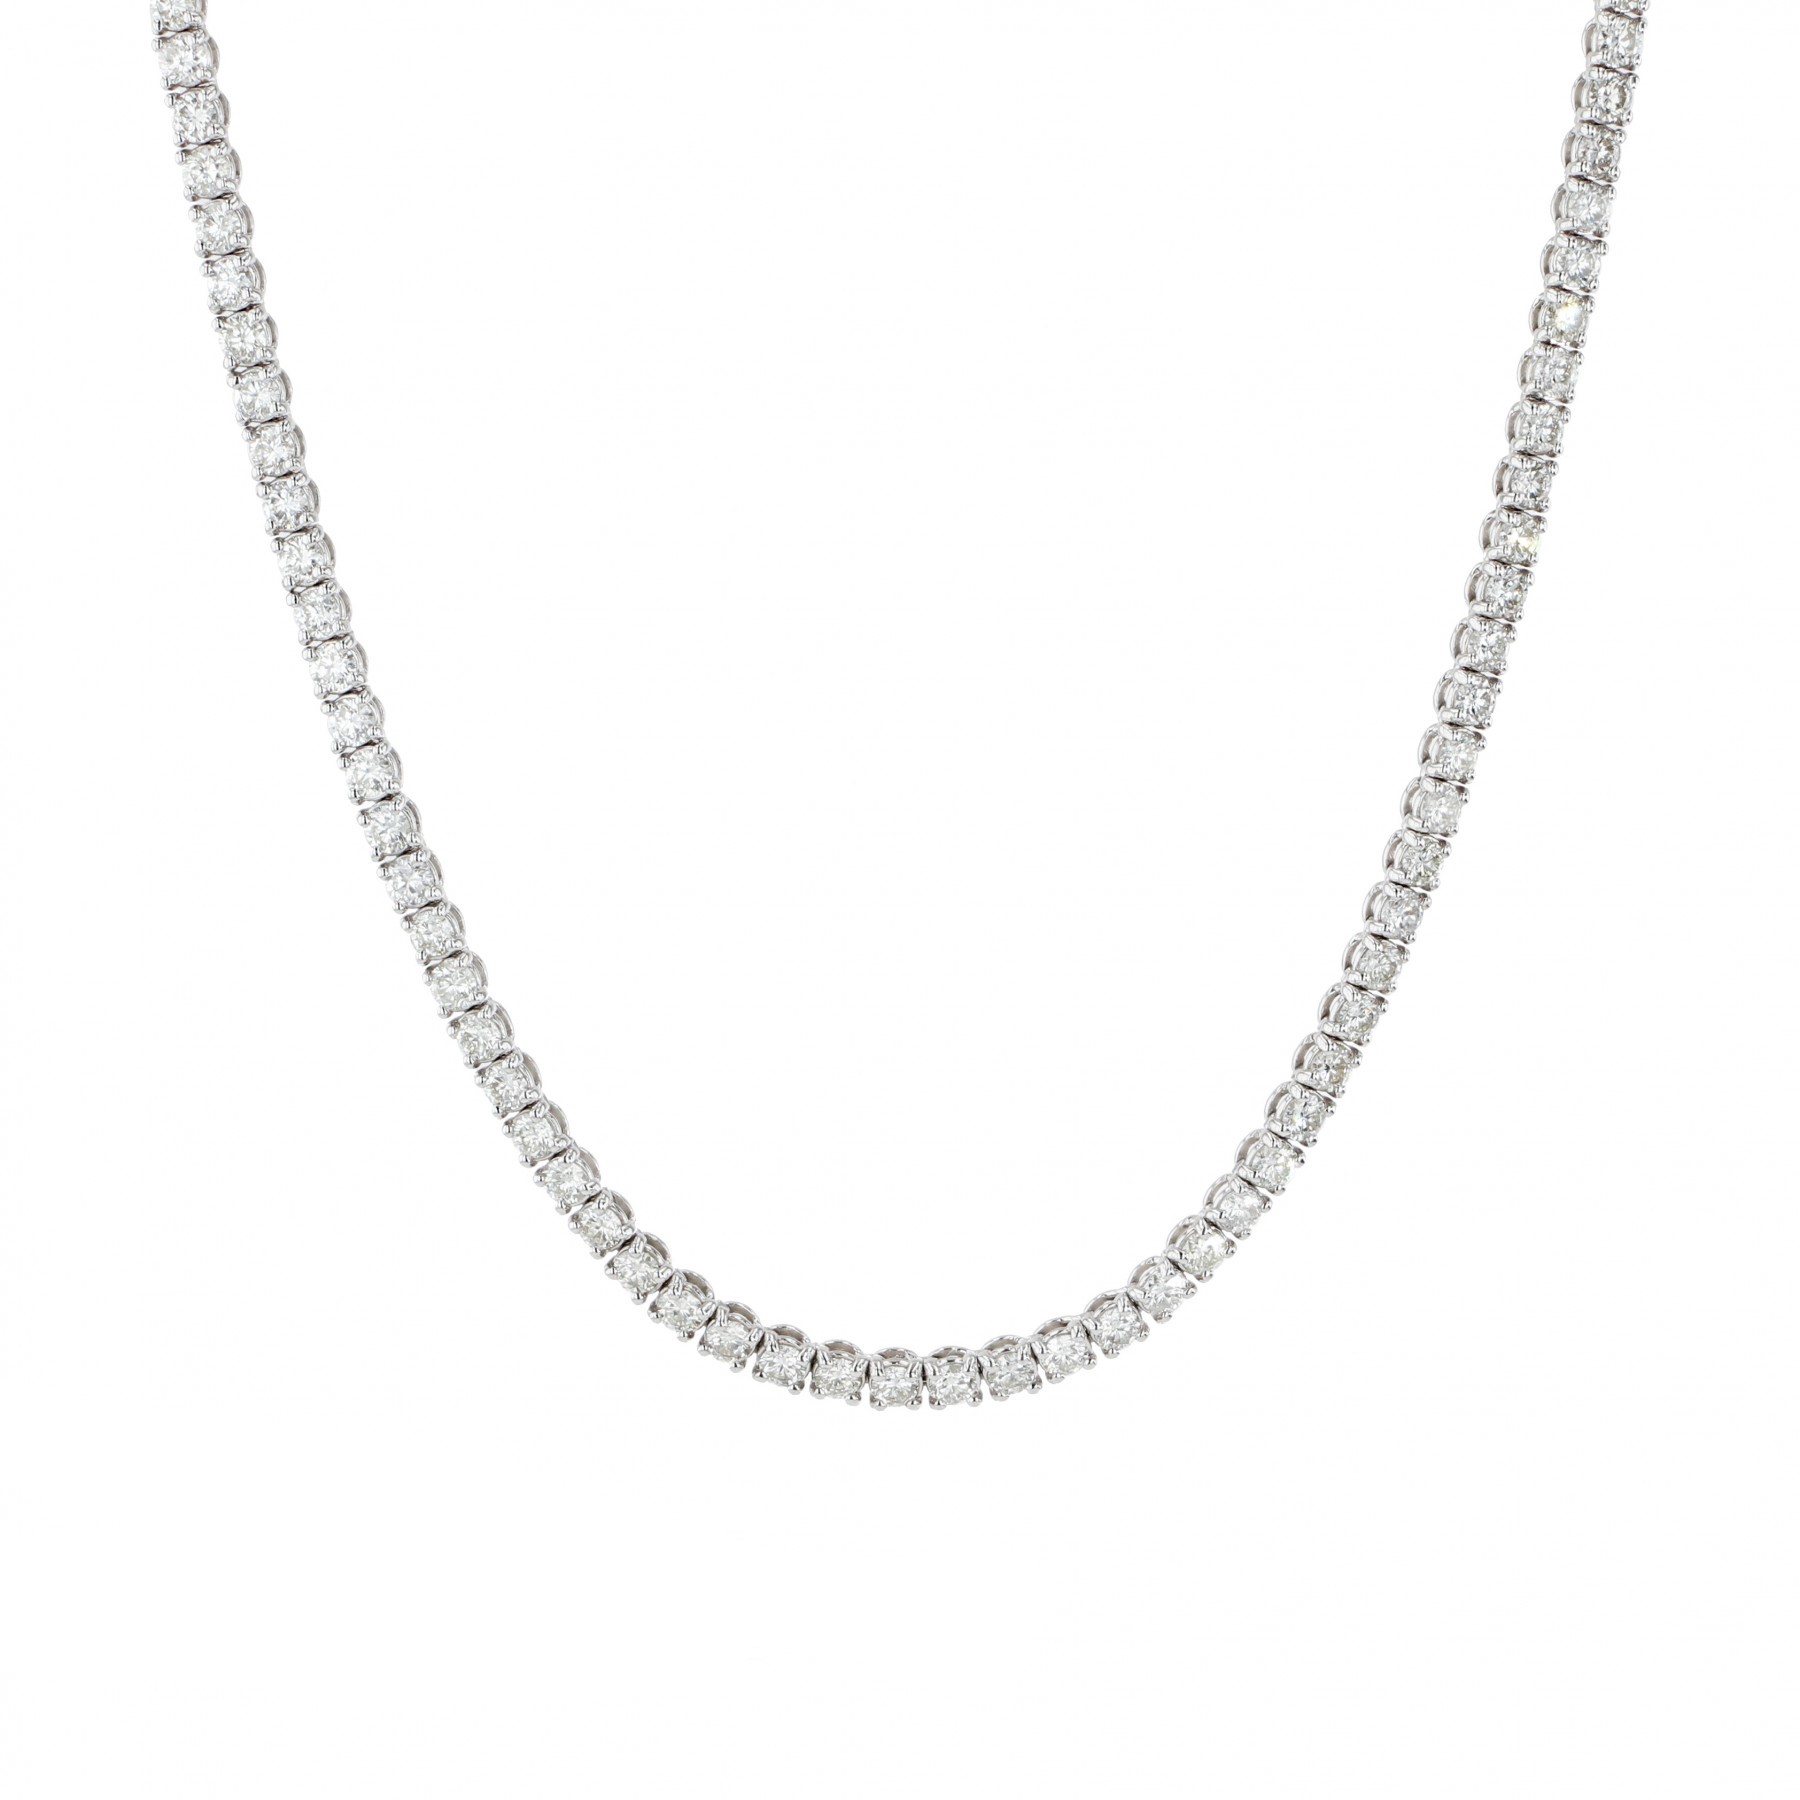 16ct Diamond Tennis Necklace